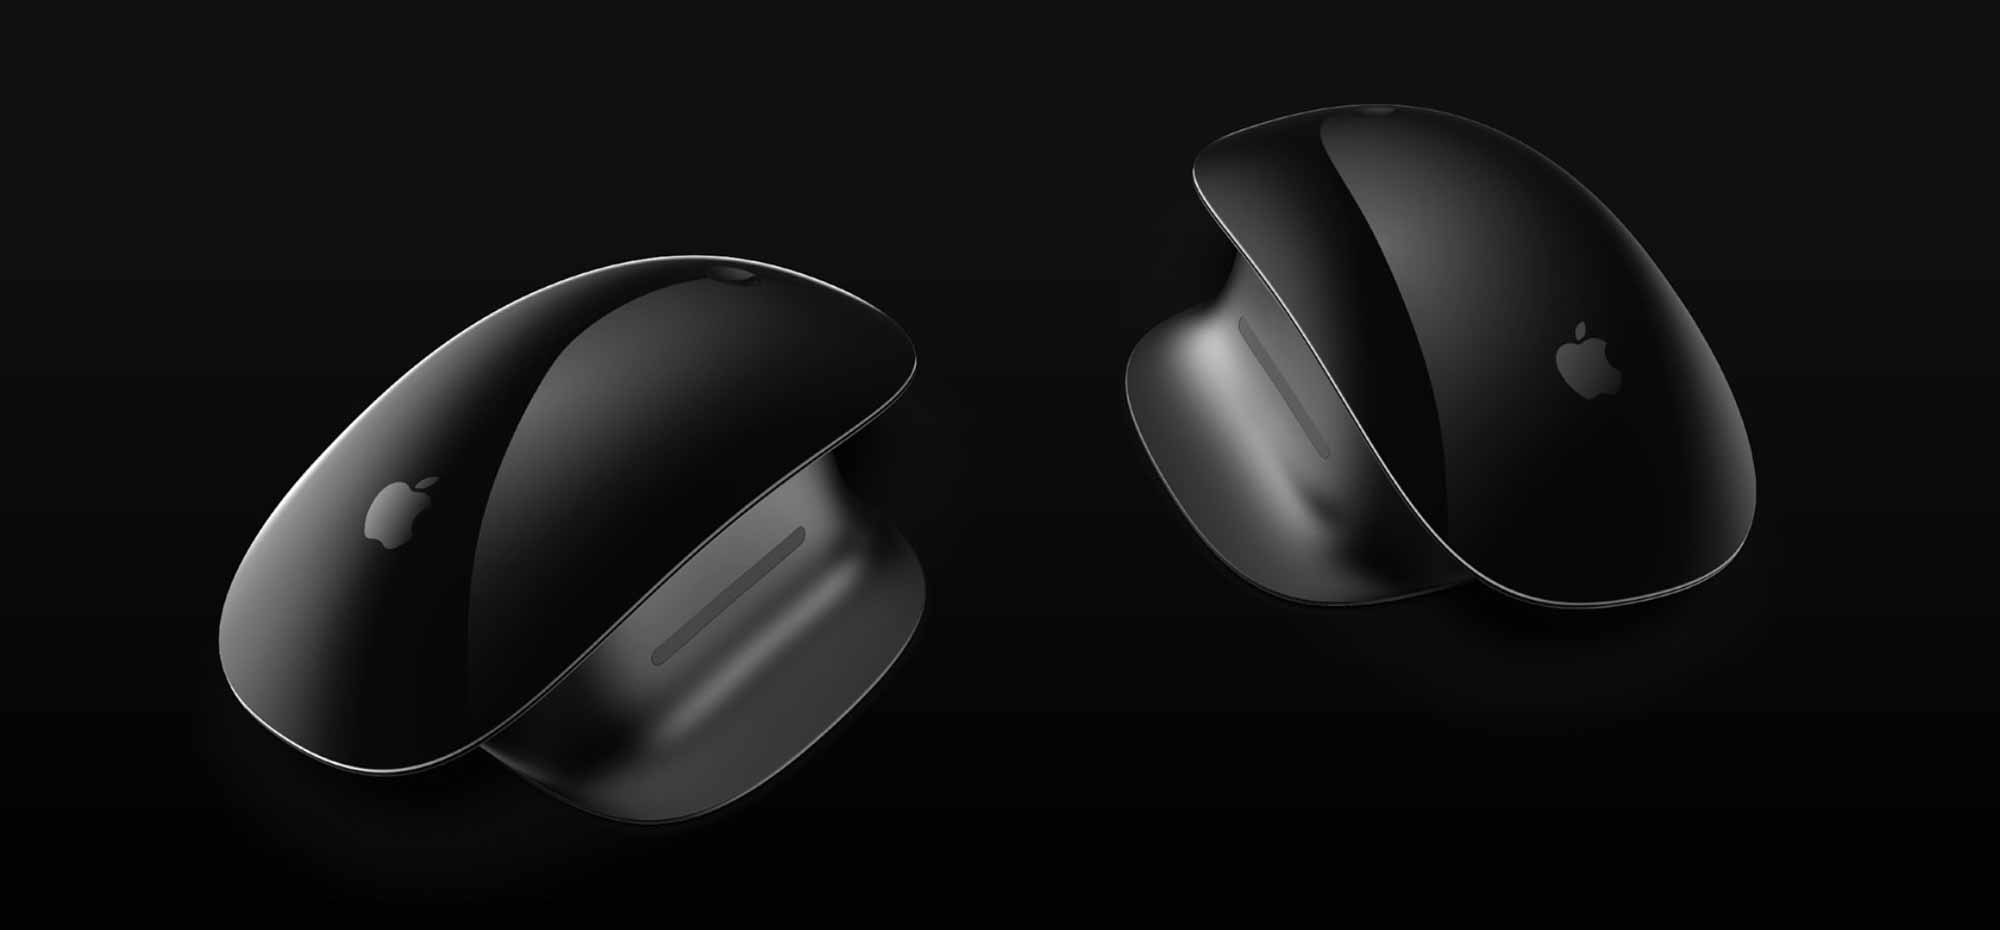 Концепция Apple Pro Mouse: двусторонний дизайн, боковая панель Taptic